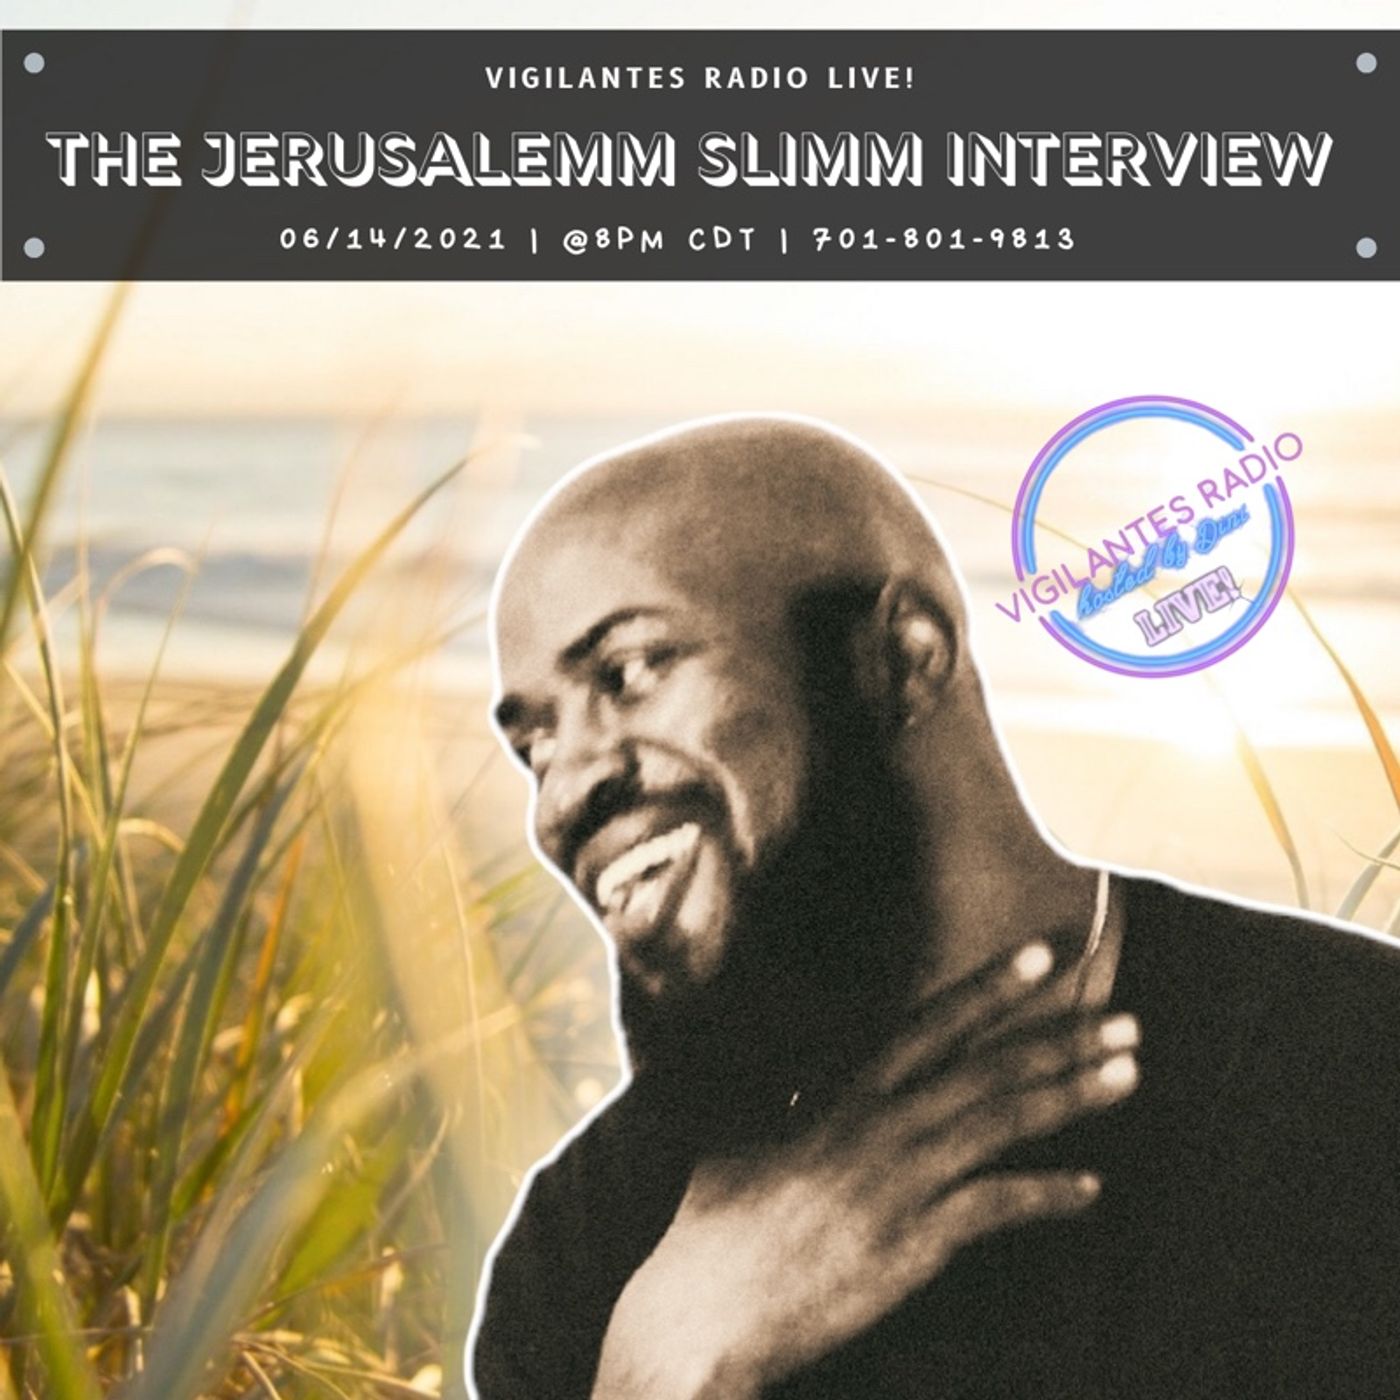 The Jerusalemm Slimm Interview. Image